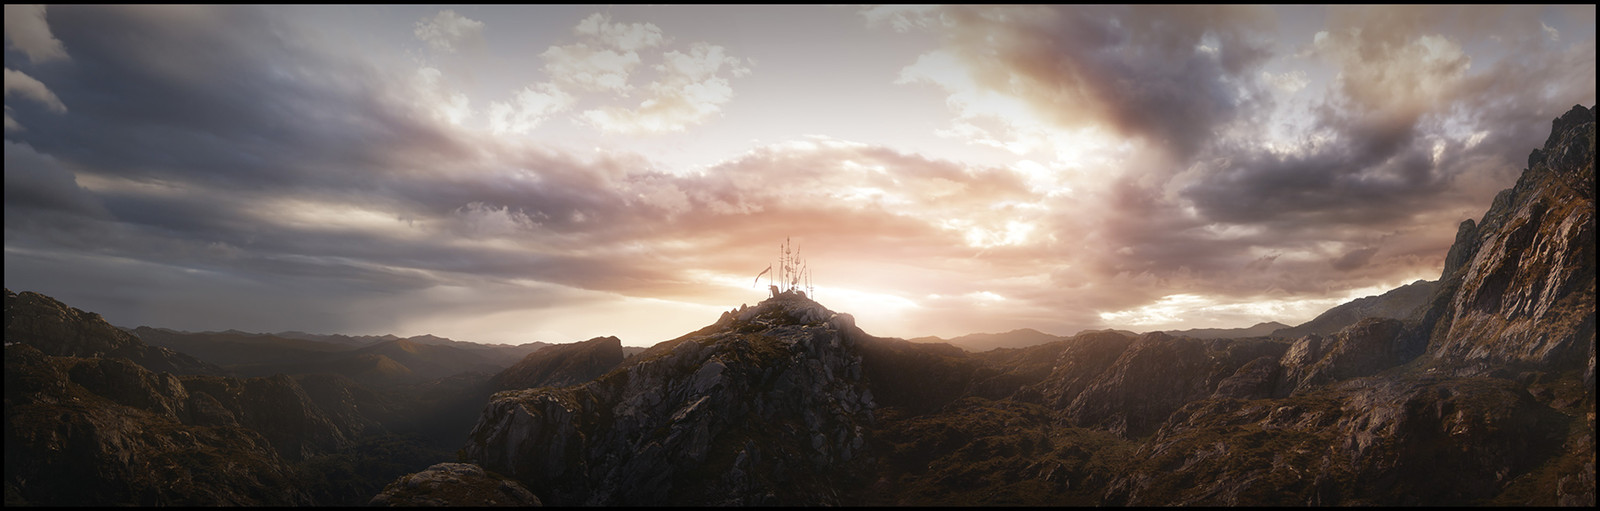 The Hobbit Trilogy / Battle scene Background 